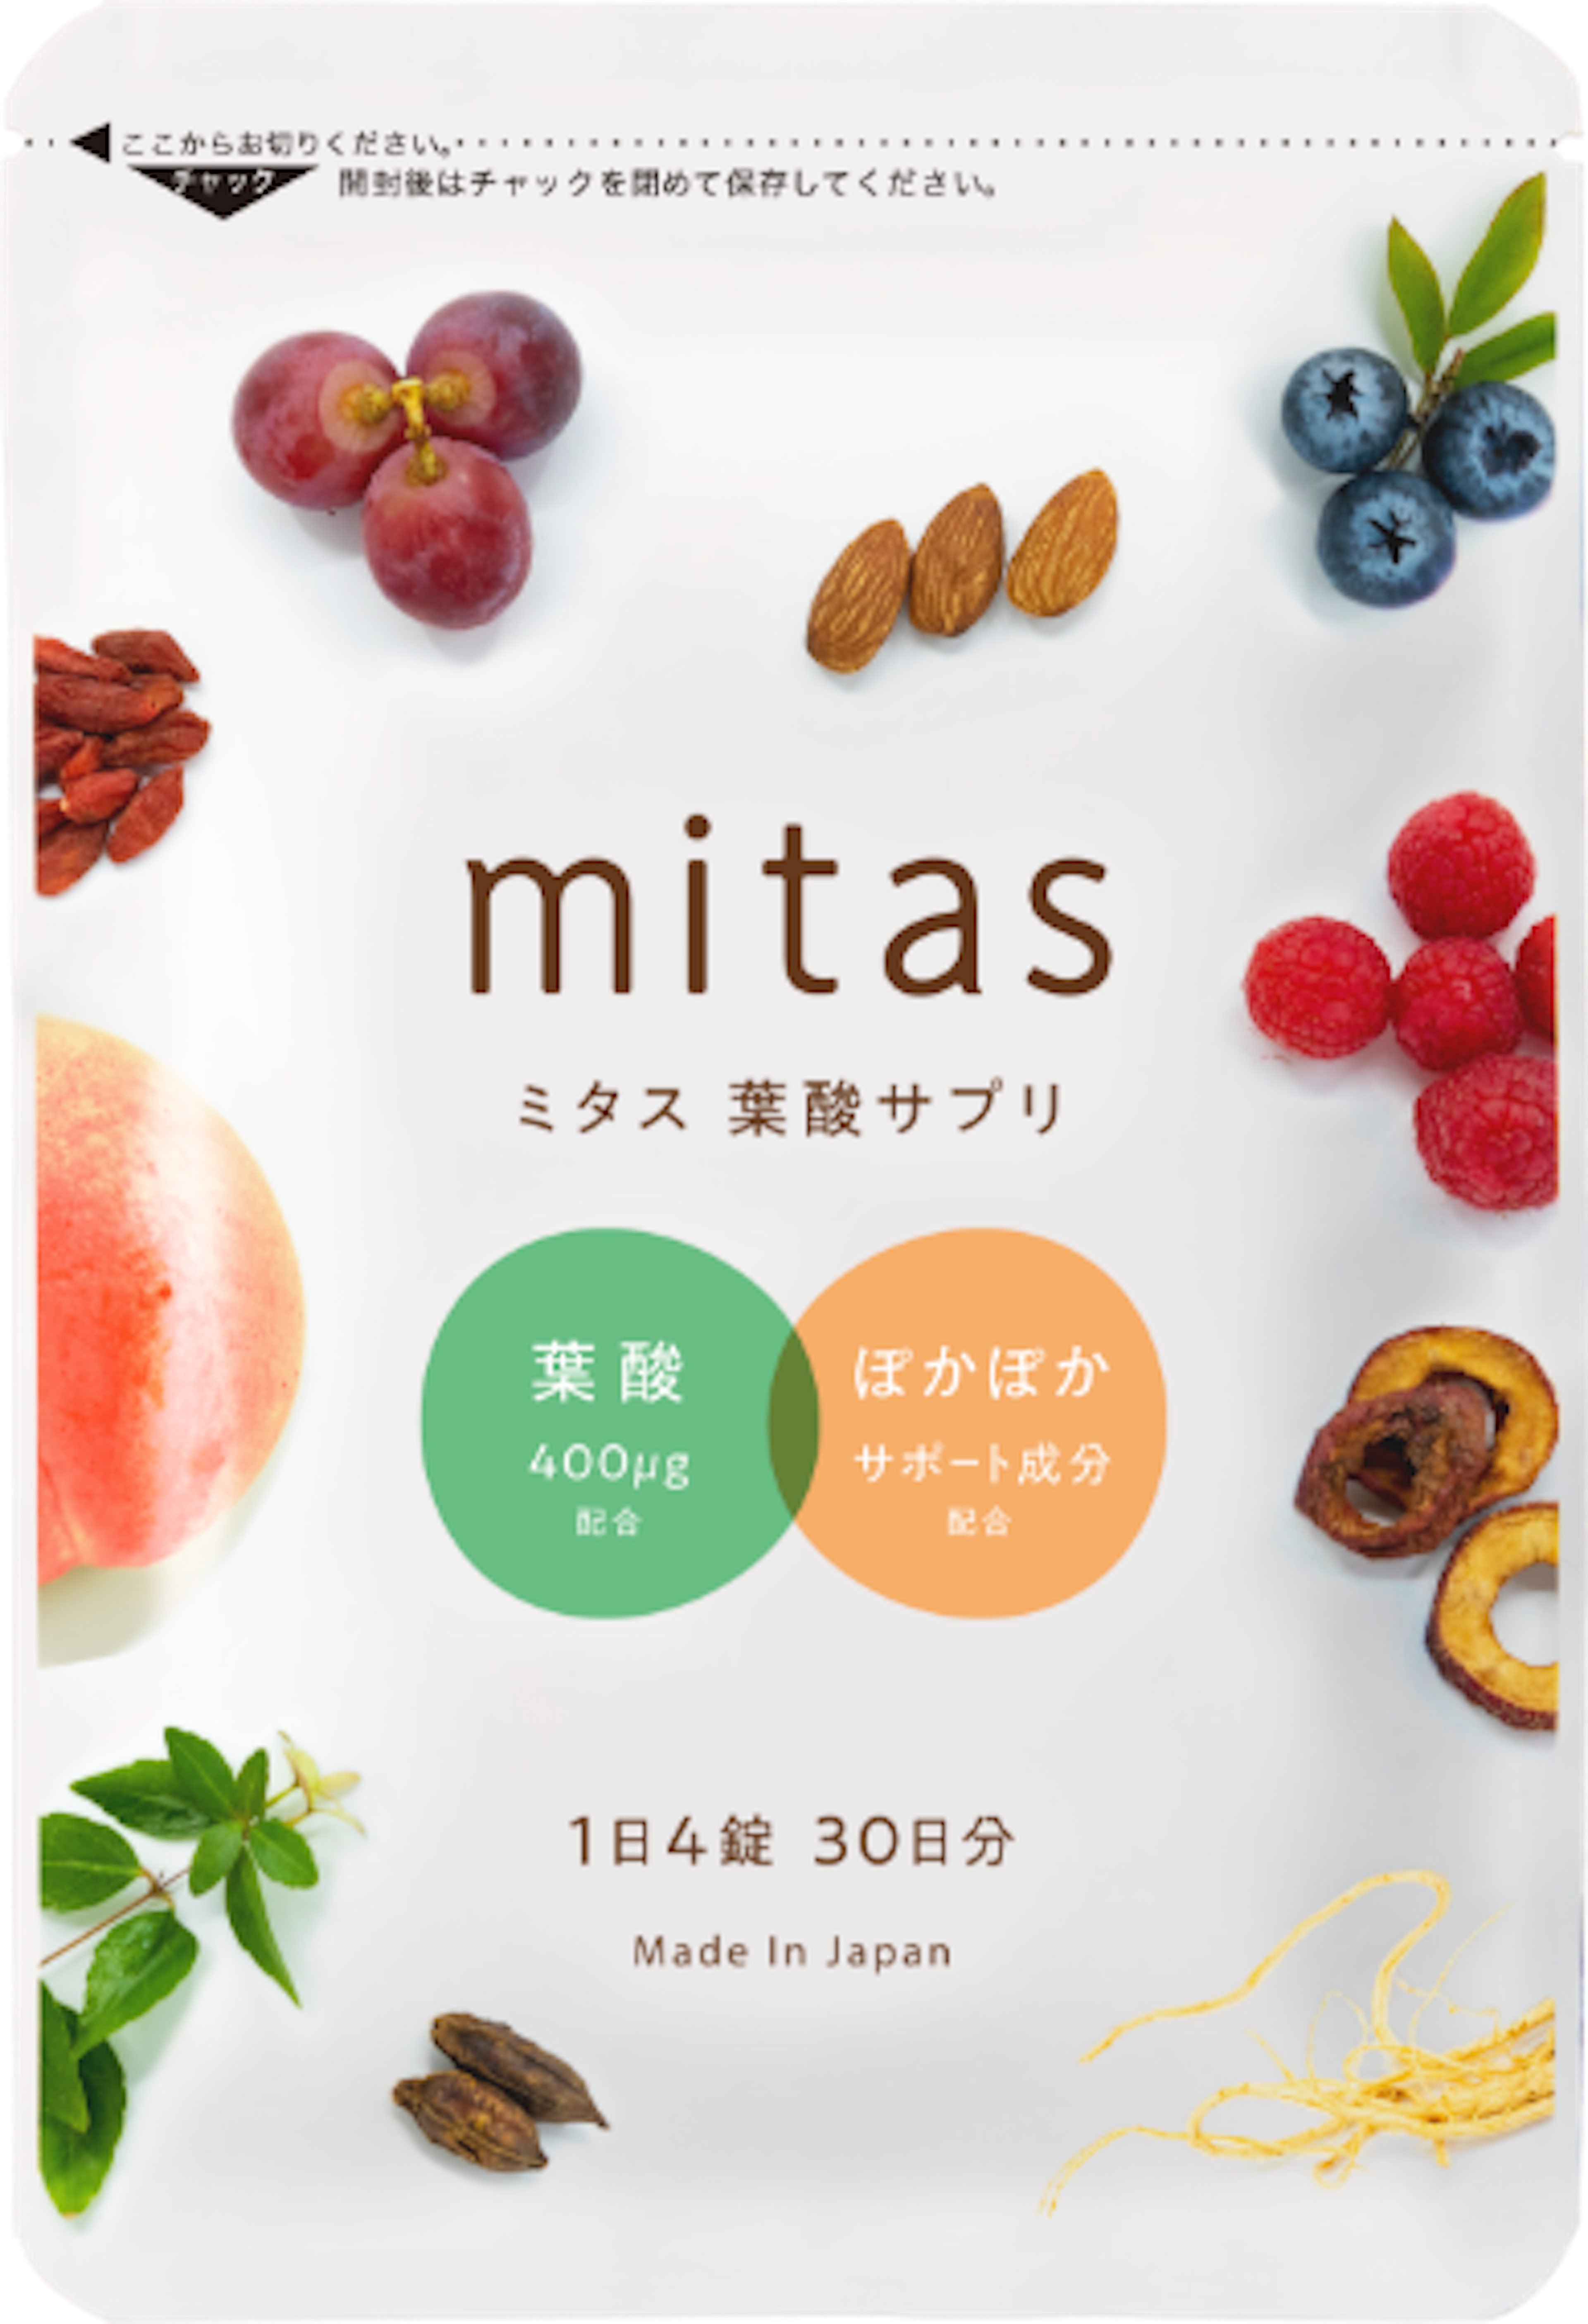 mitas (ミタス) 葉酸サプリ公式サイト | 売上No.1 | 葉酸 x 温活の新発想 | mitas series 公式サイト